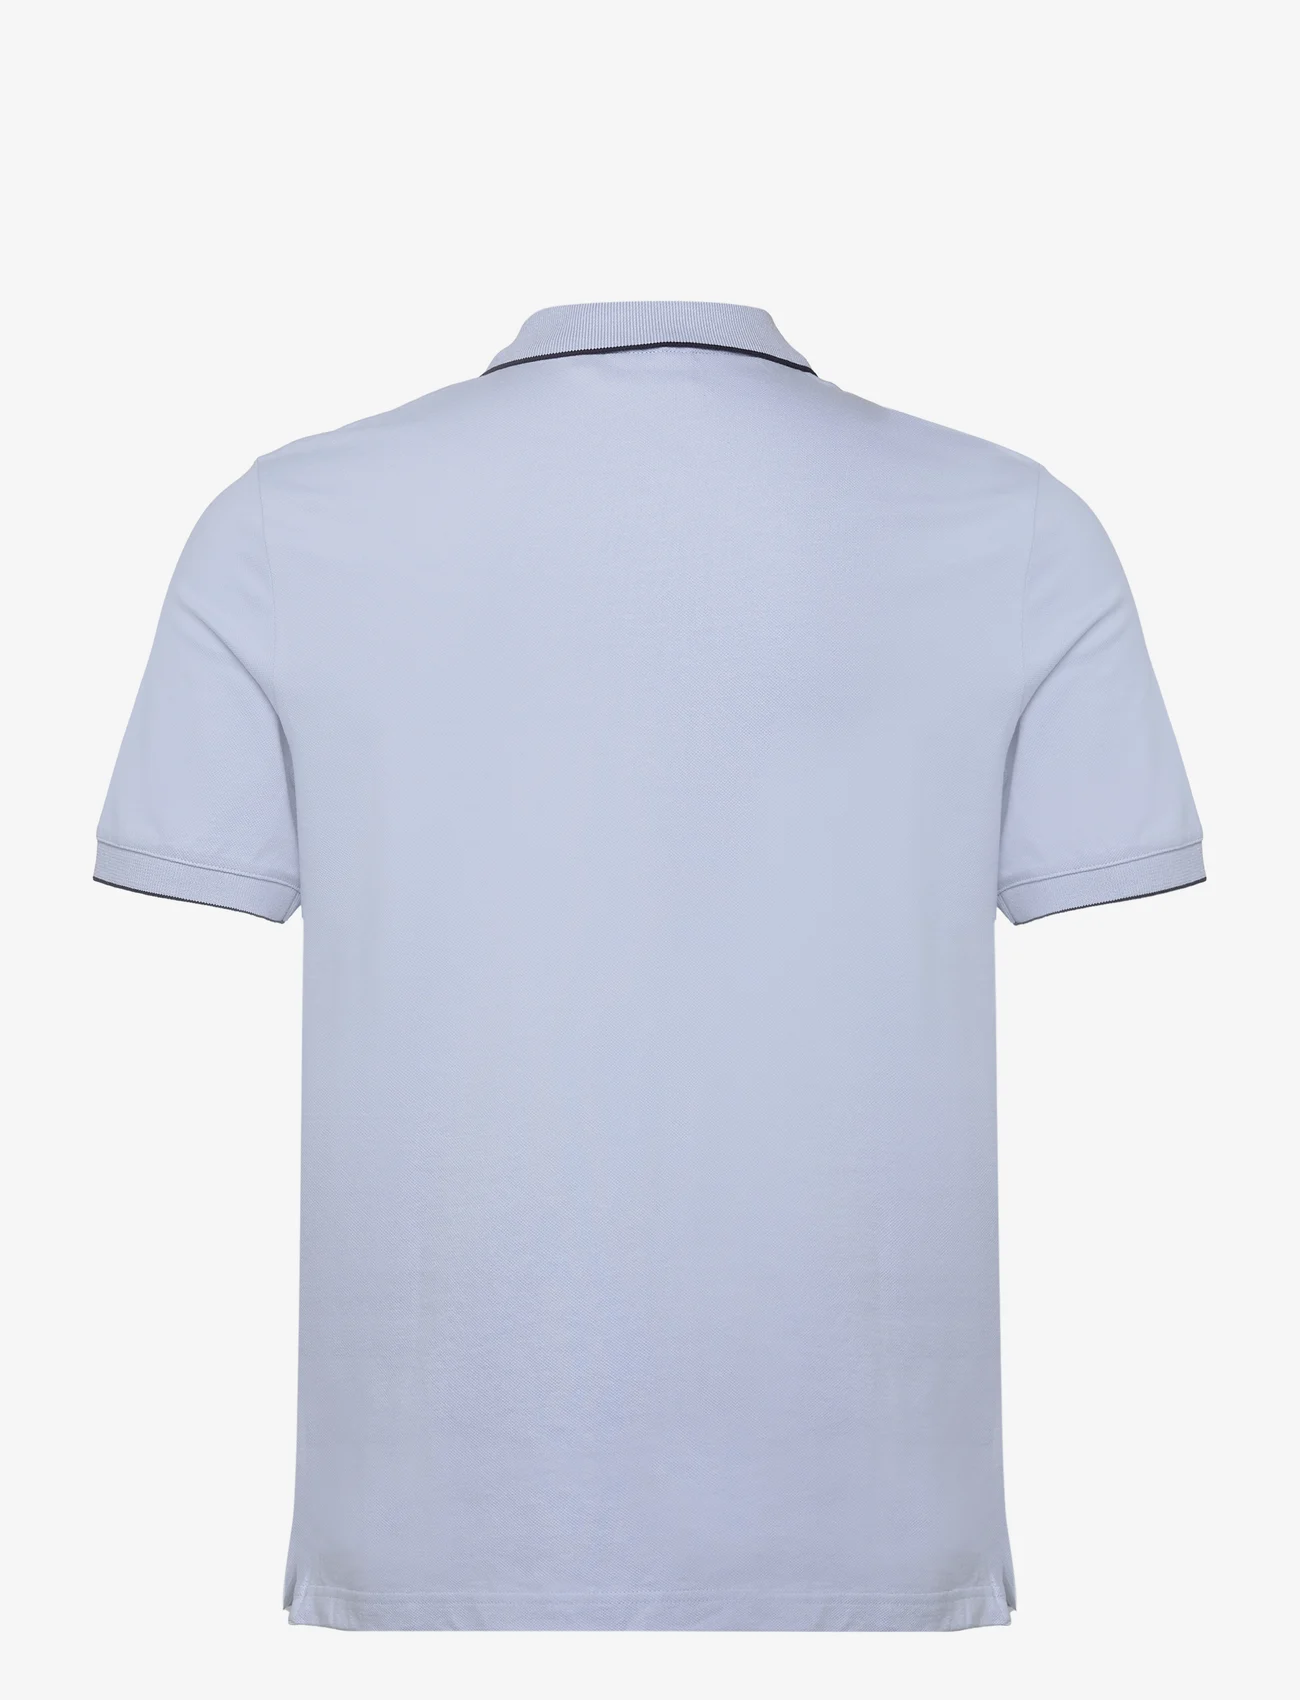 Calvin Klein - STRETCH PIQUE TIPPING POLO - polo marškinėliai trumpomis rankovėmis - kentucky blue - 1